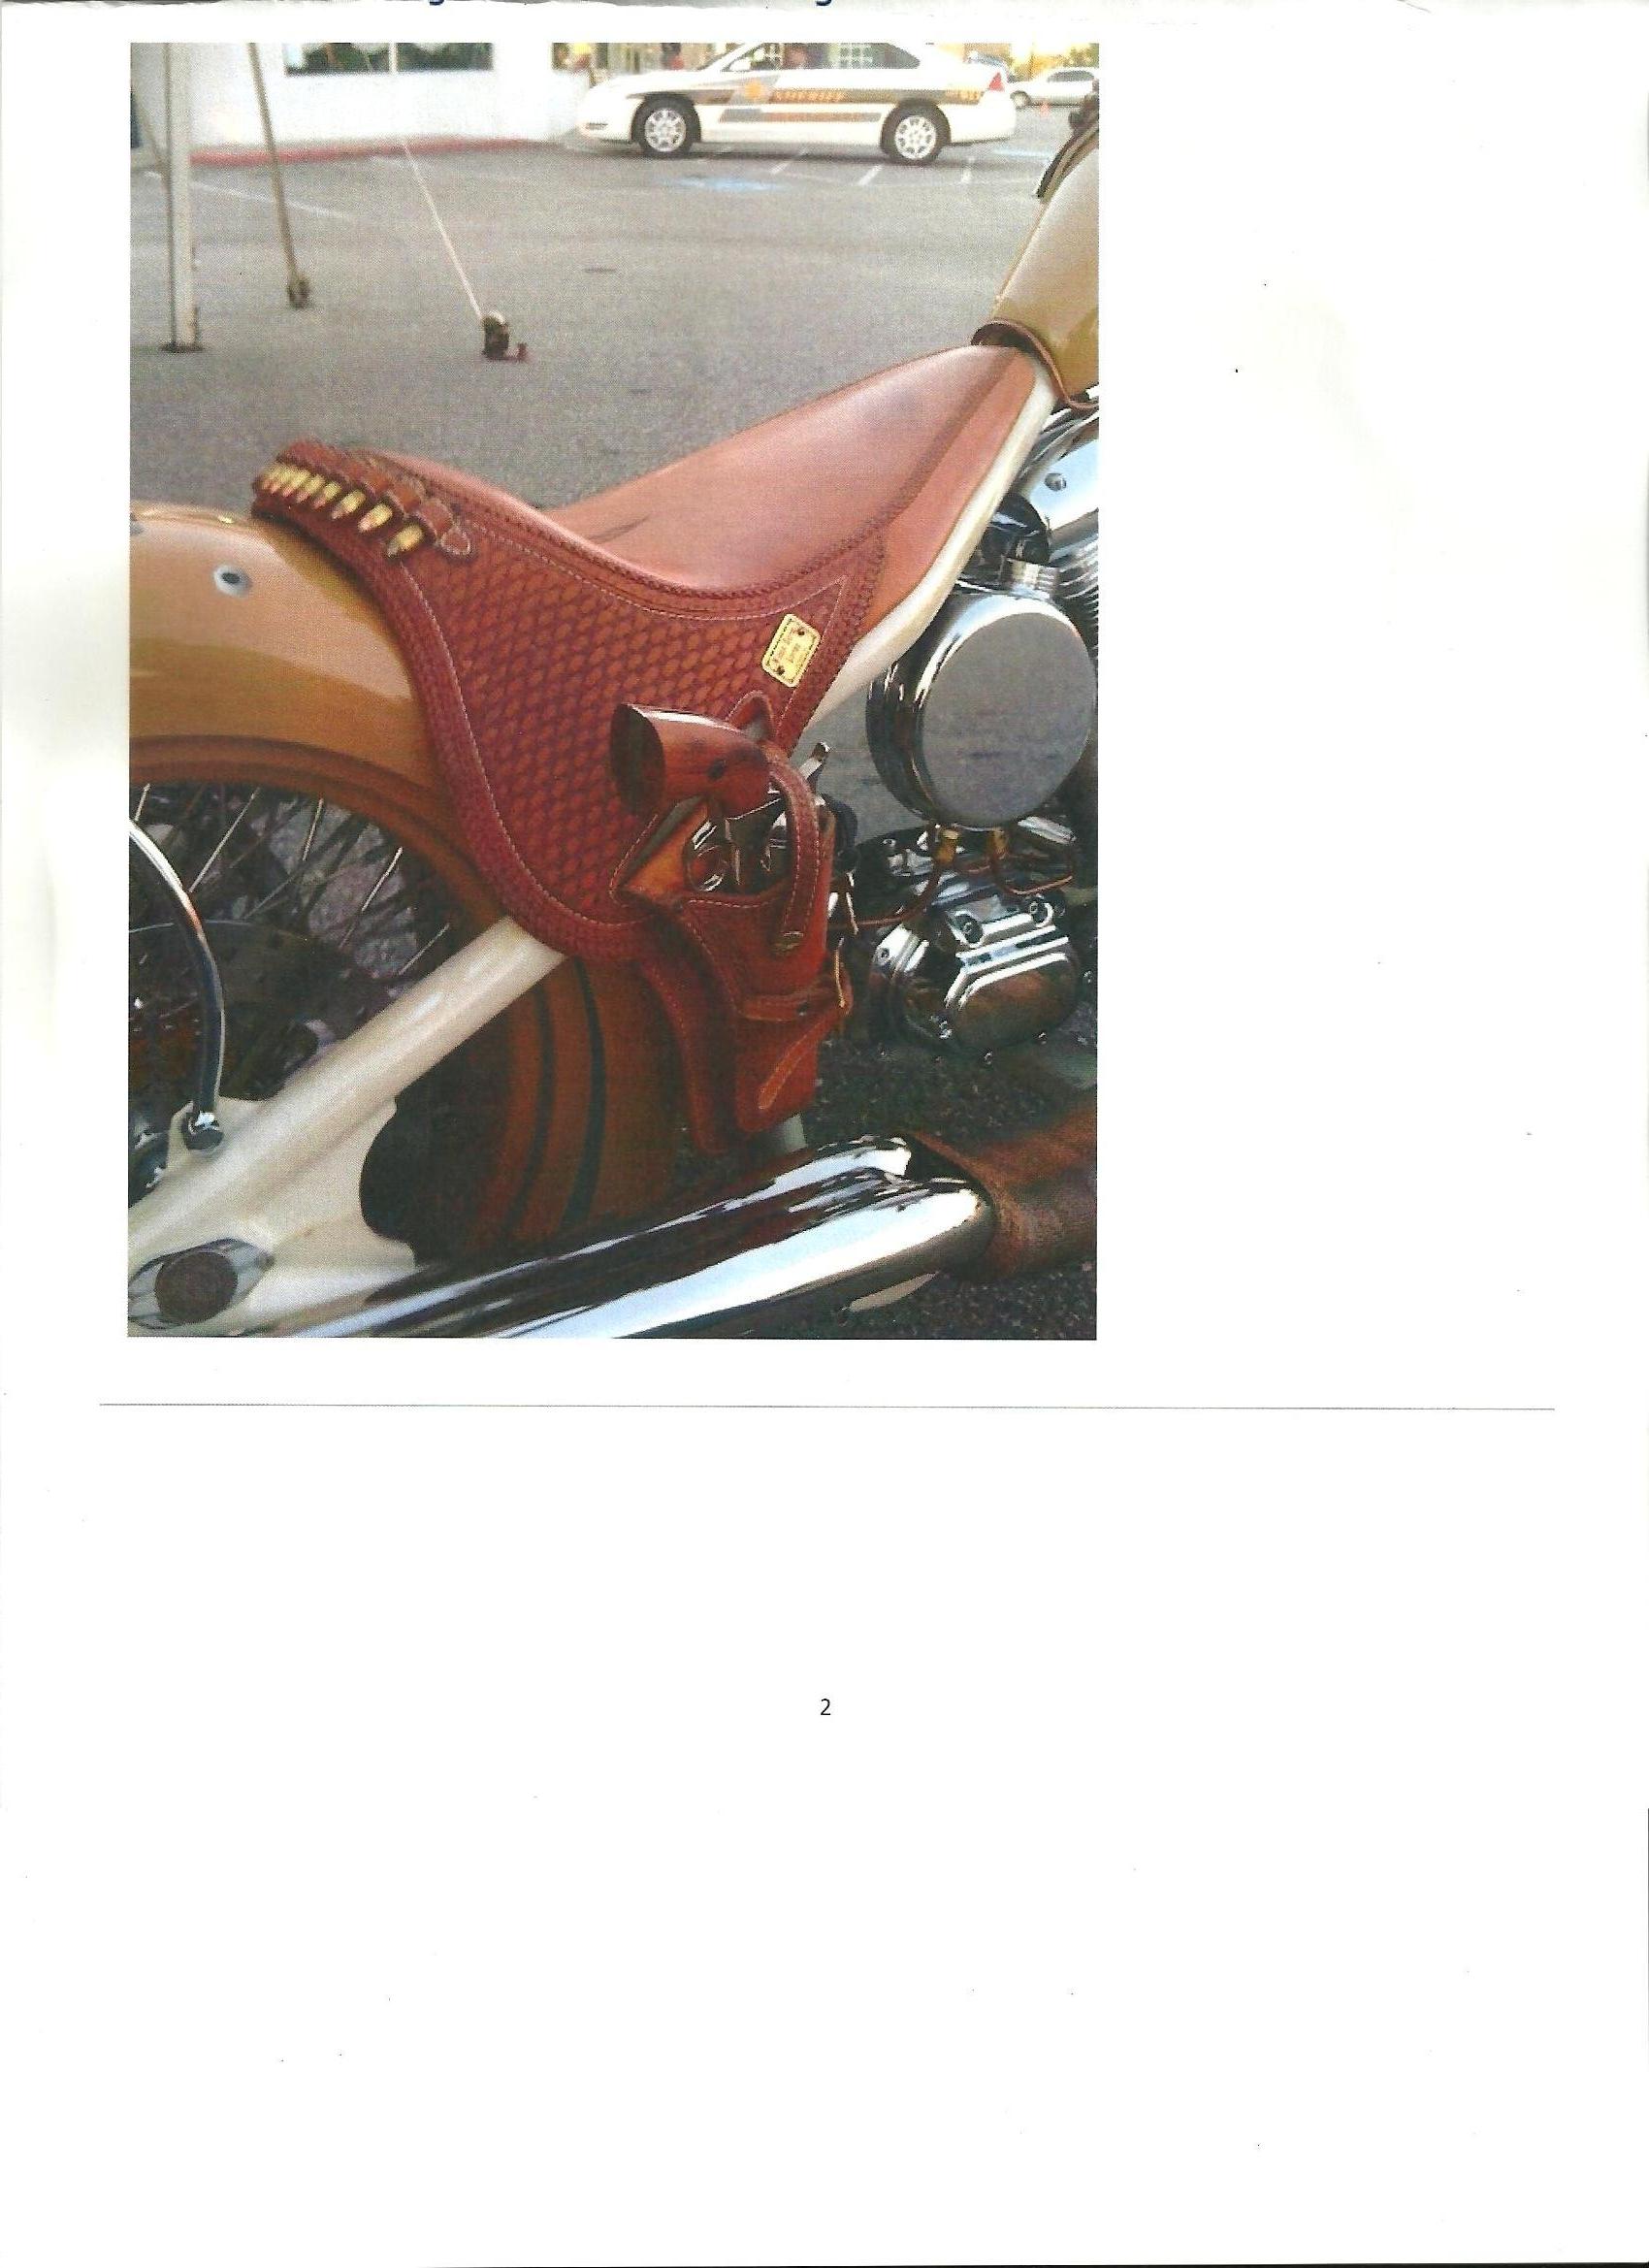 Harley seat